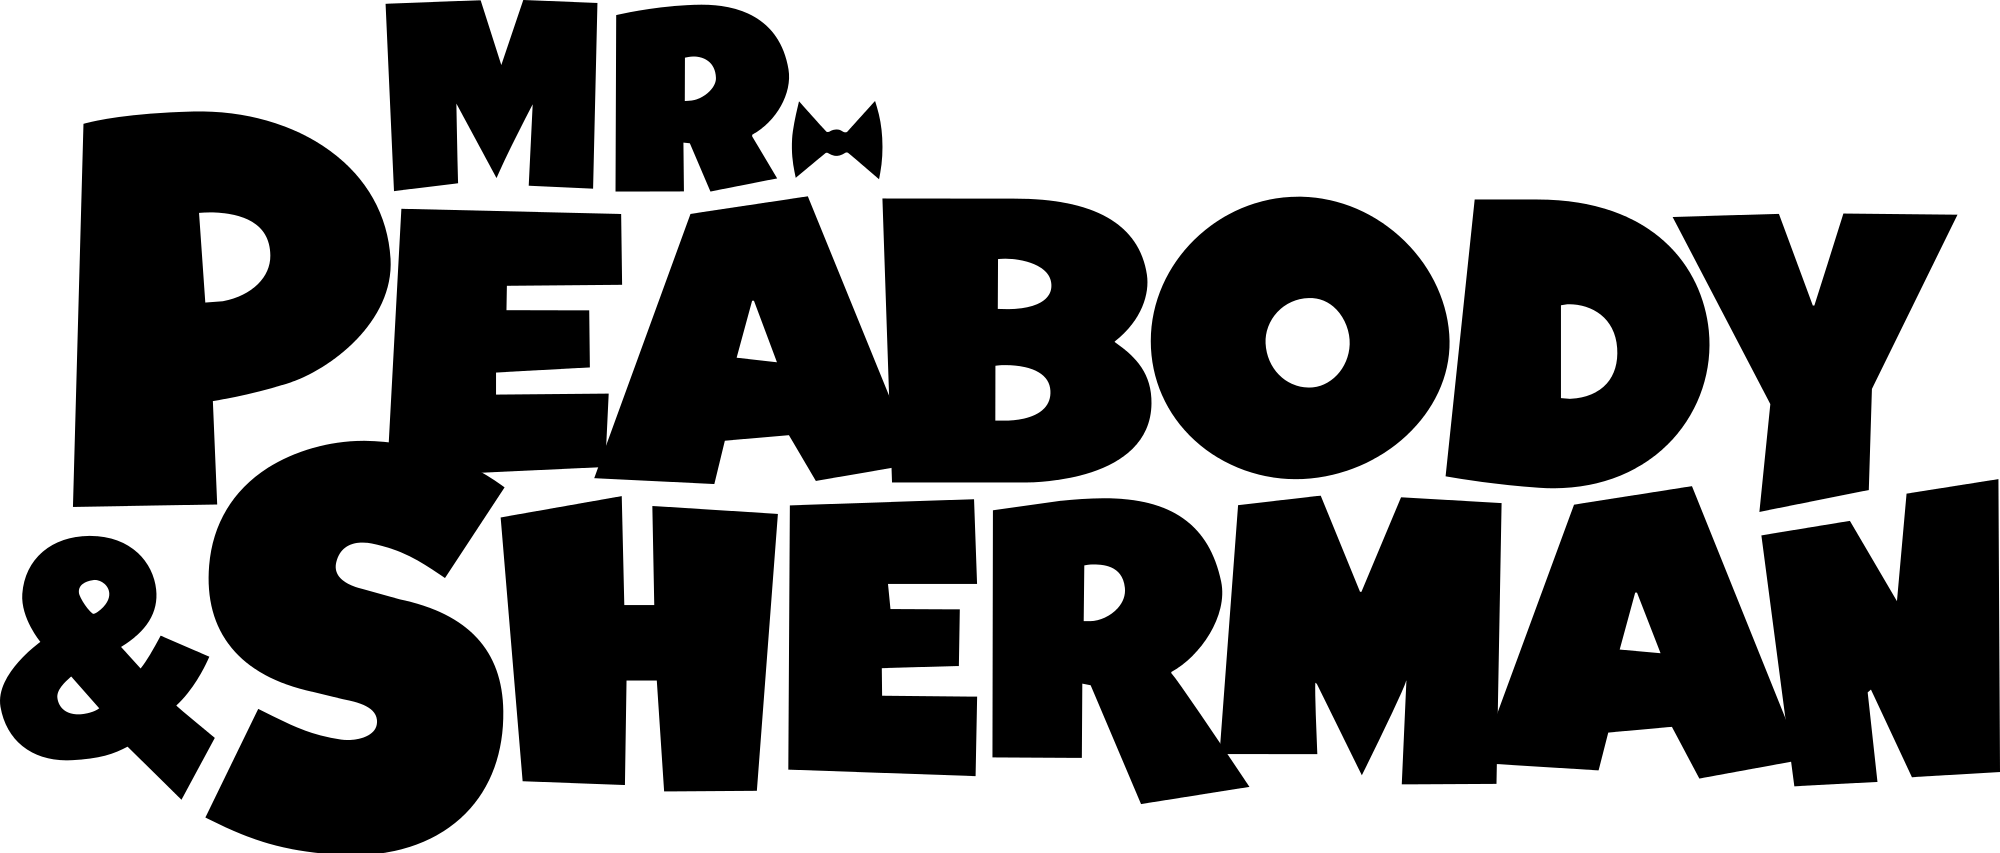 Sherman Logo - File:Mr. Peabody and Sherman logo.svg - Wikimedia Commons